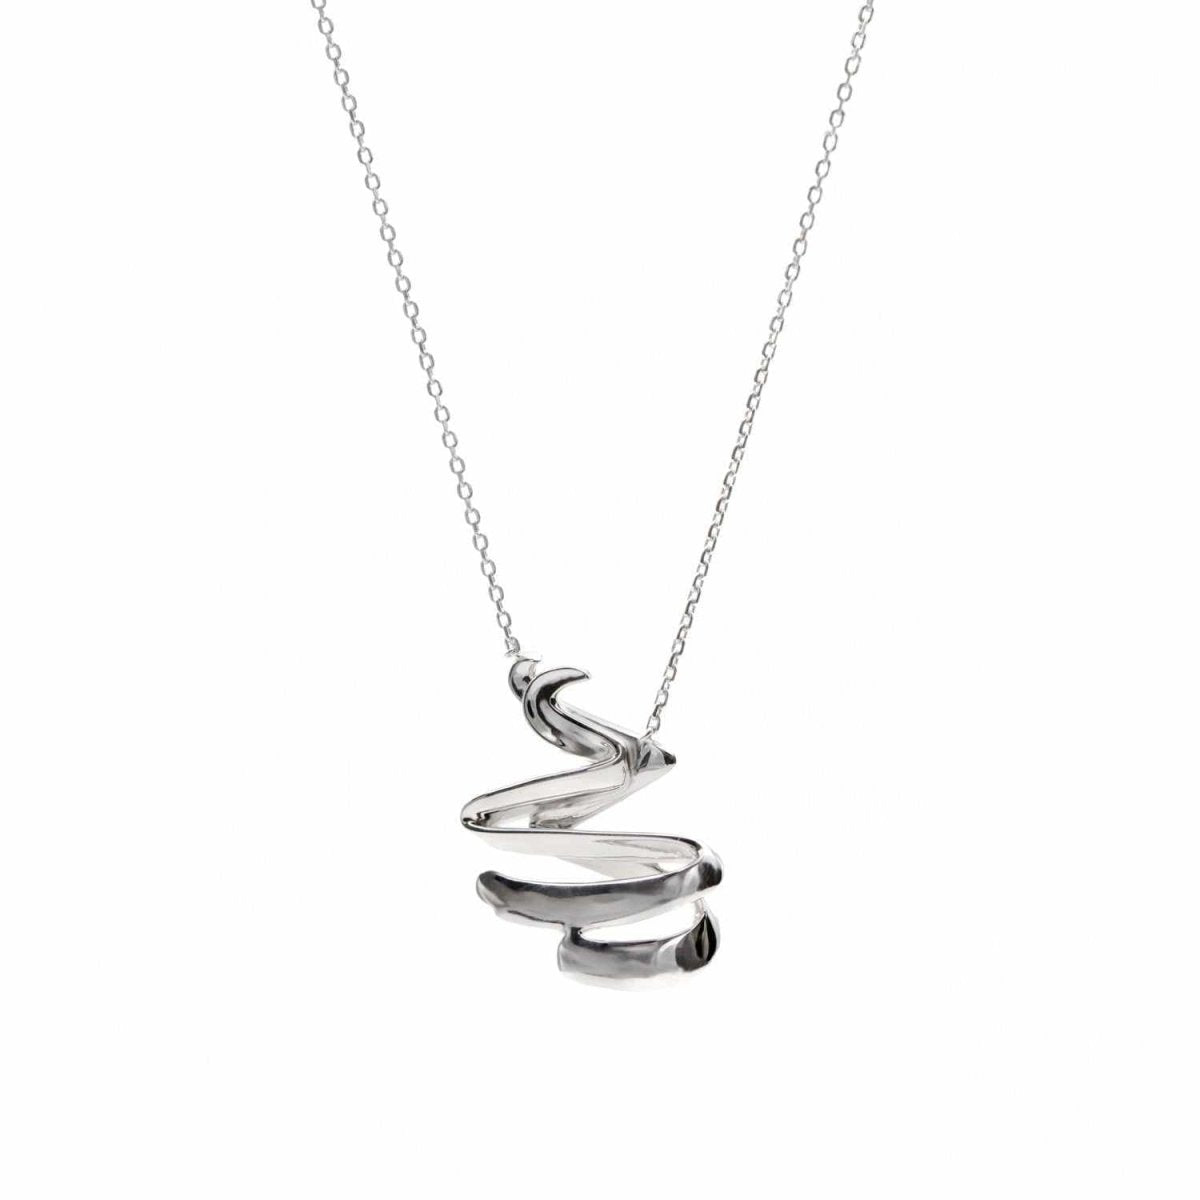 Necklace - Necklaces - Original silver necklaces with snake design